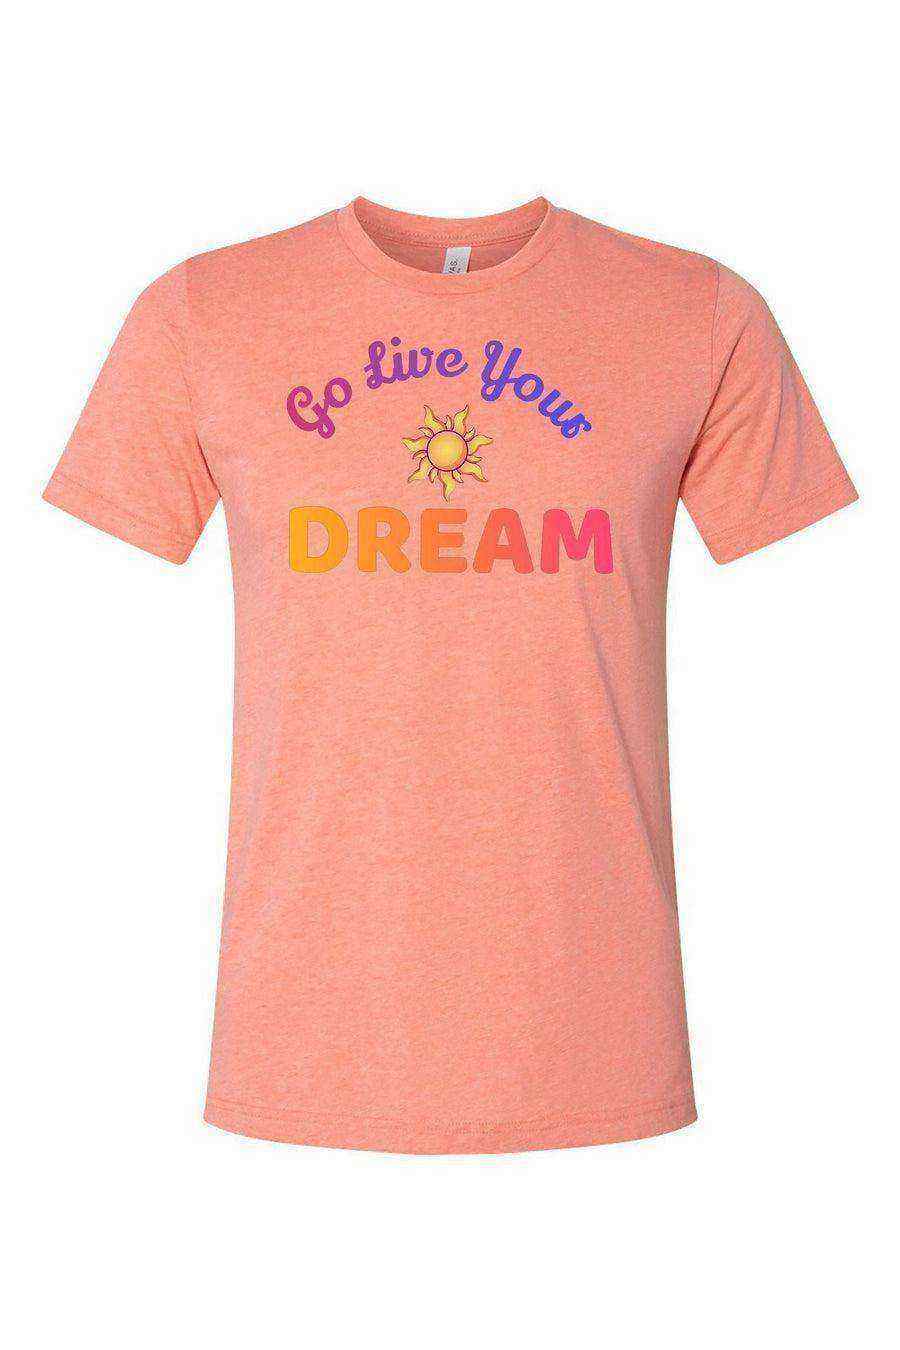 Go Live Your Dream Shirt | Rapunzel Shirt | Tangled Shirt - Dylan's Tees